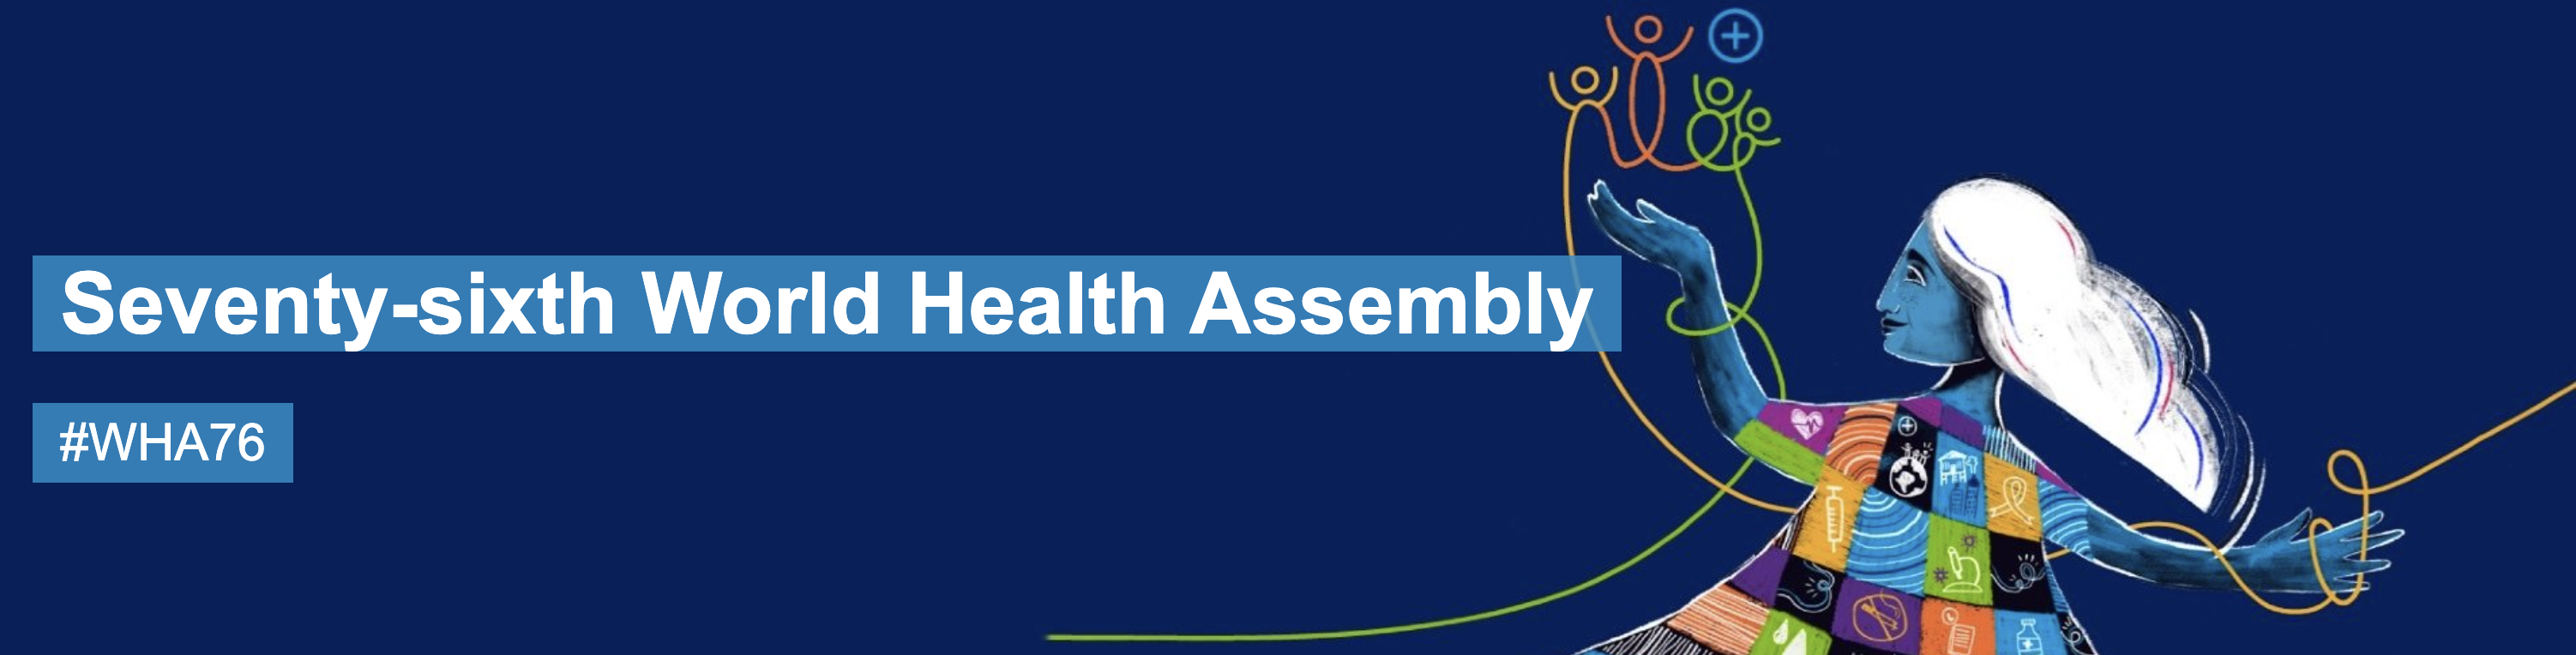 Seventy- Sixth World Health Assembly banner